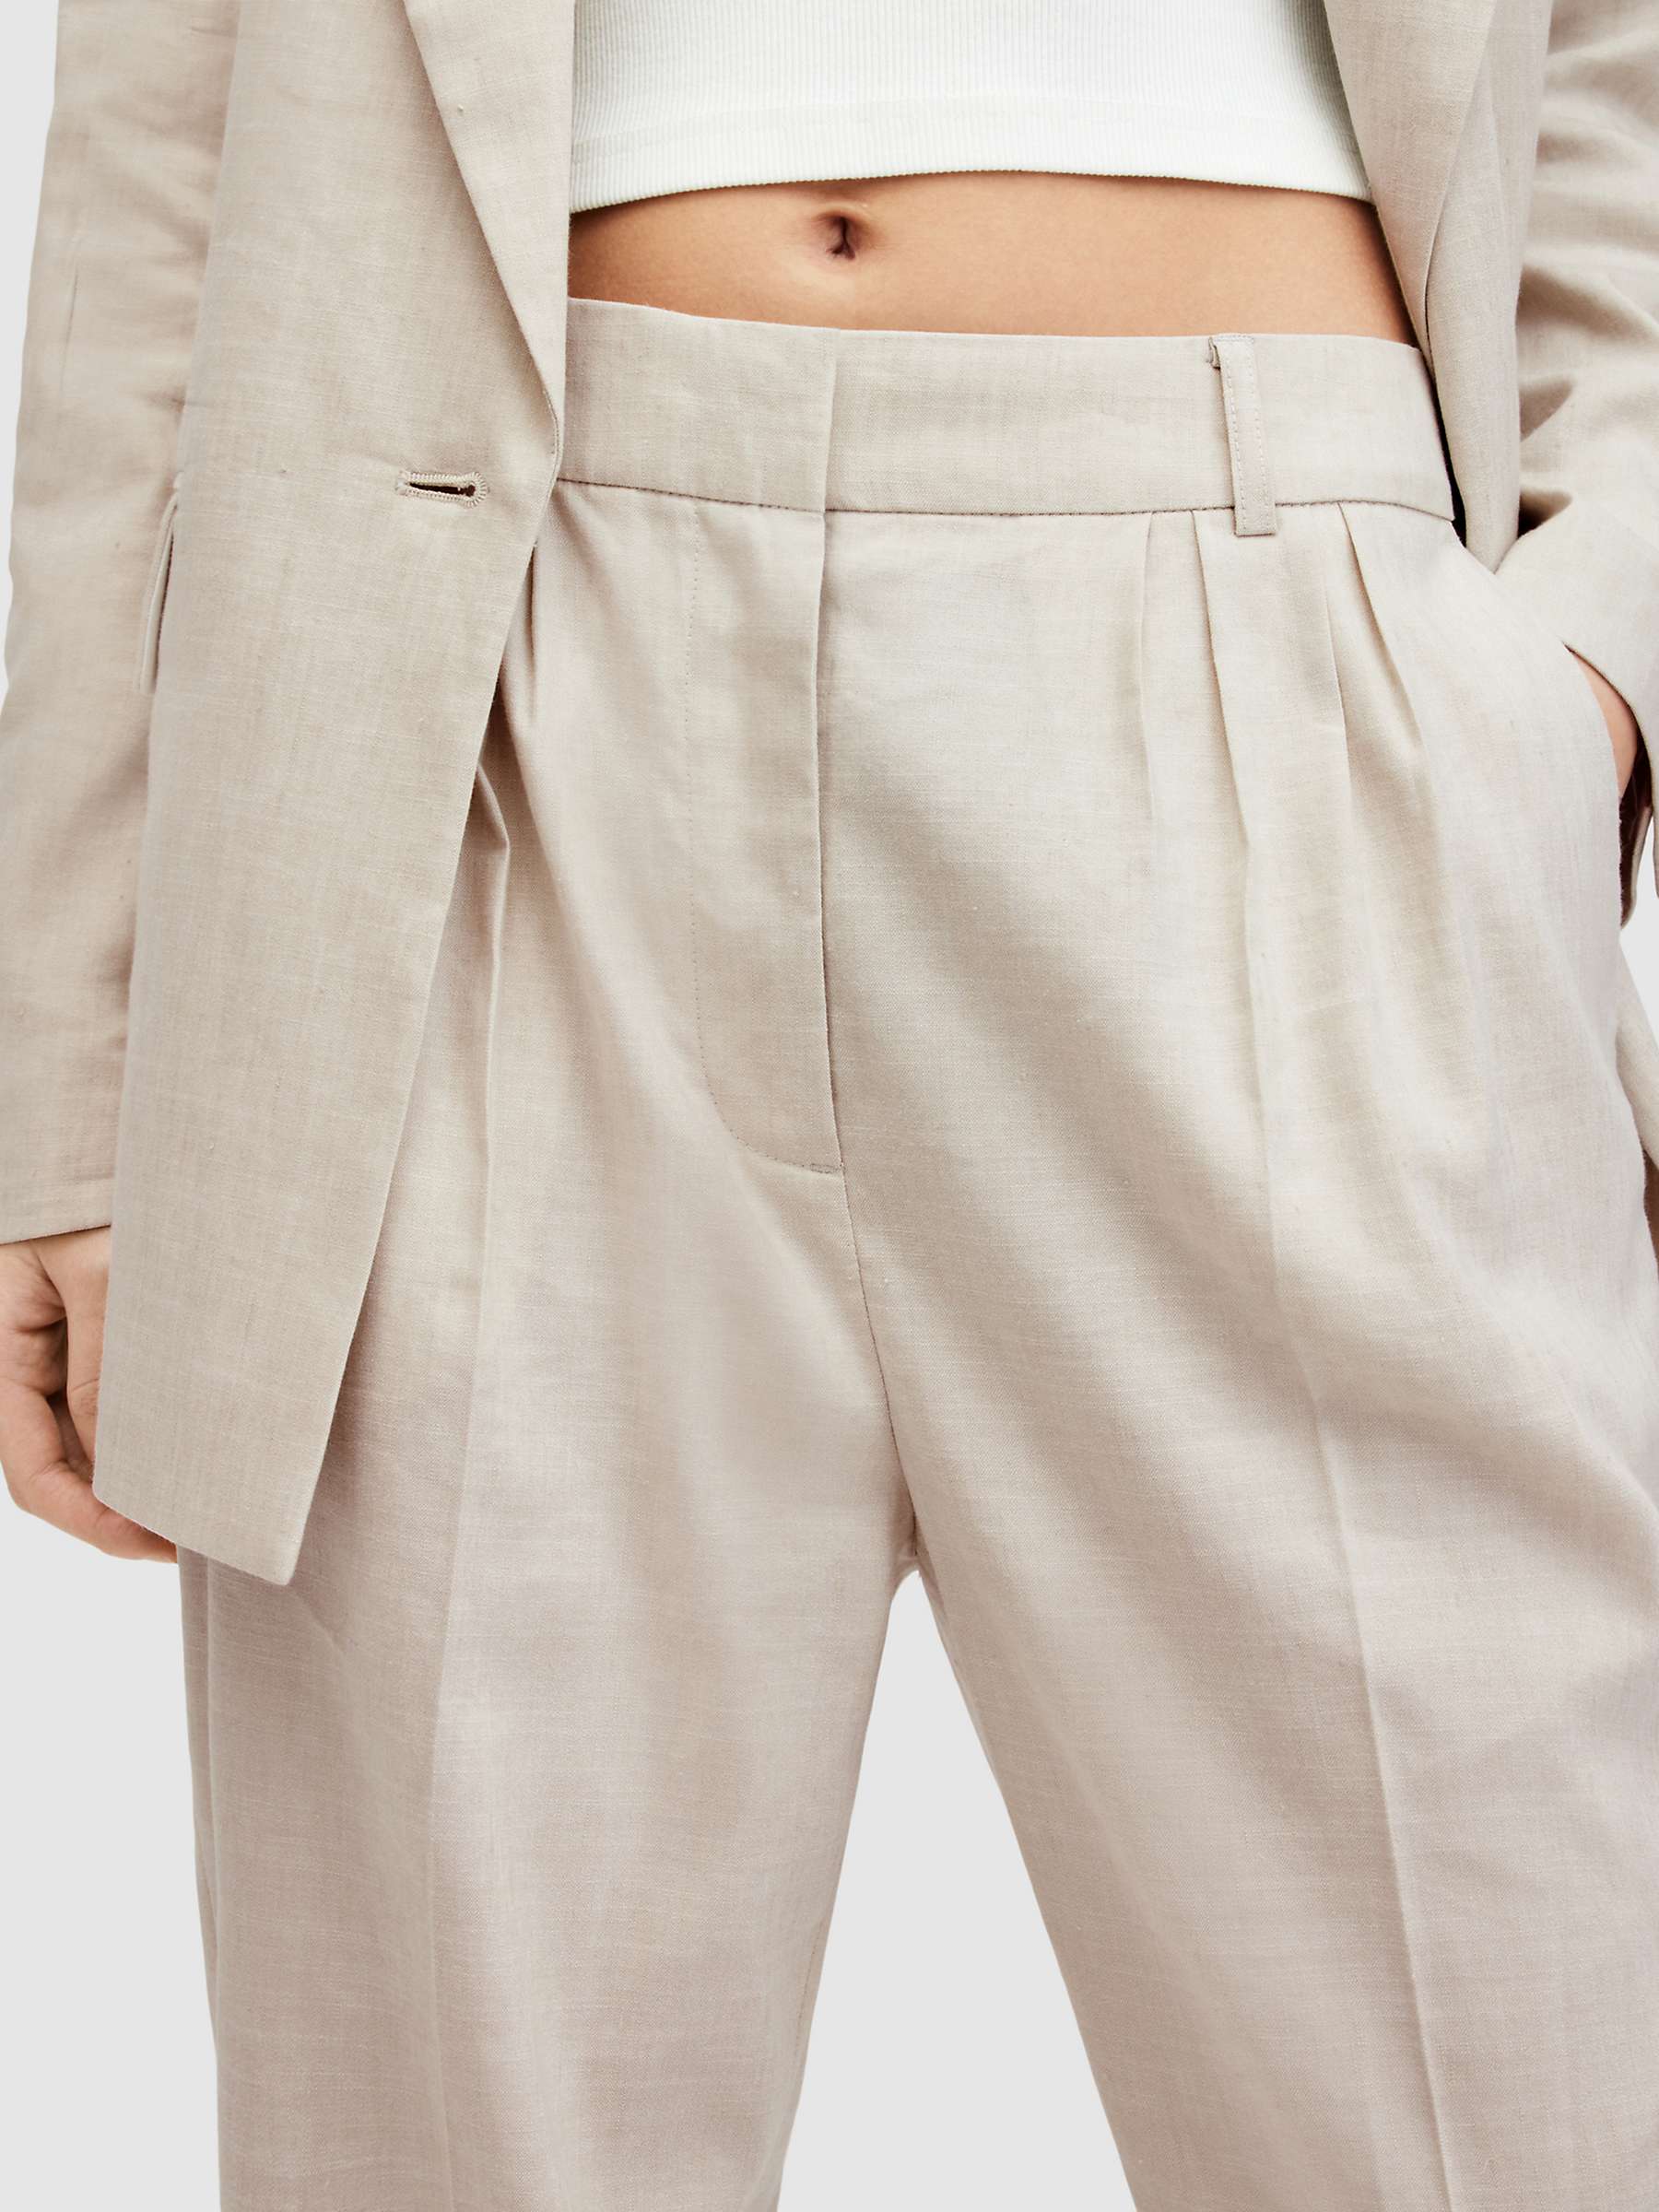 Buy AllSaints Whitney Linen Blend Trousers, Beige Online at johnlewis.com